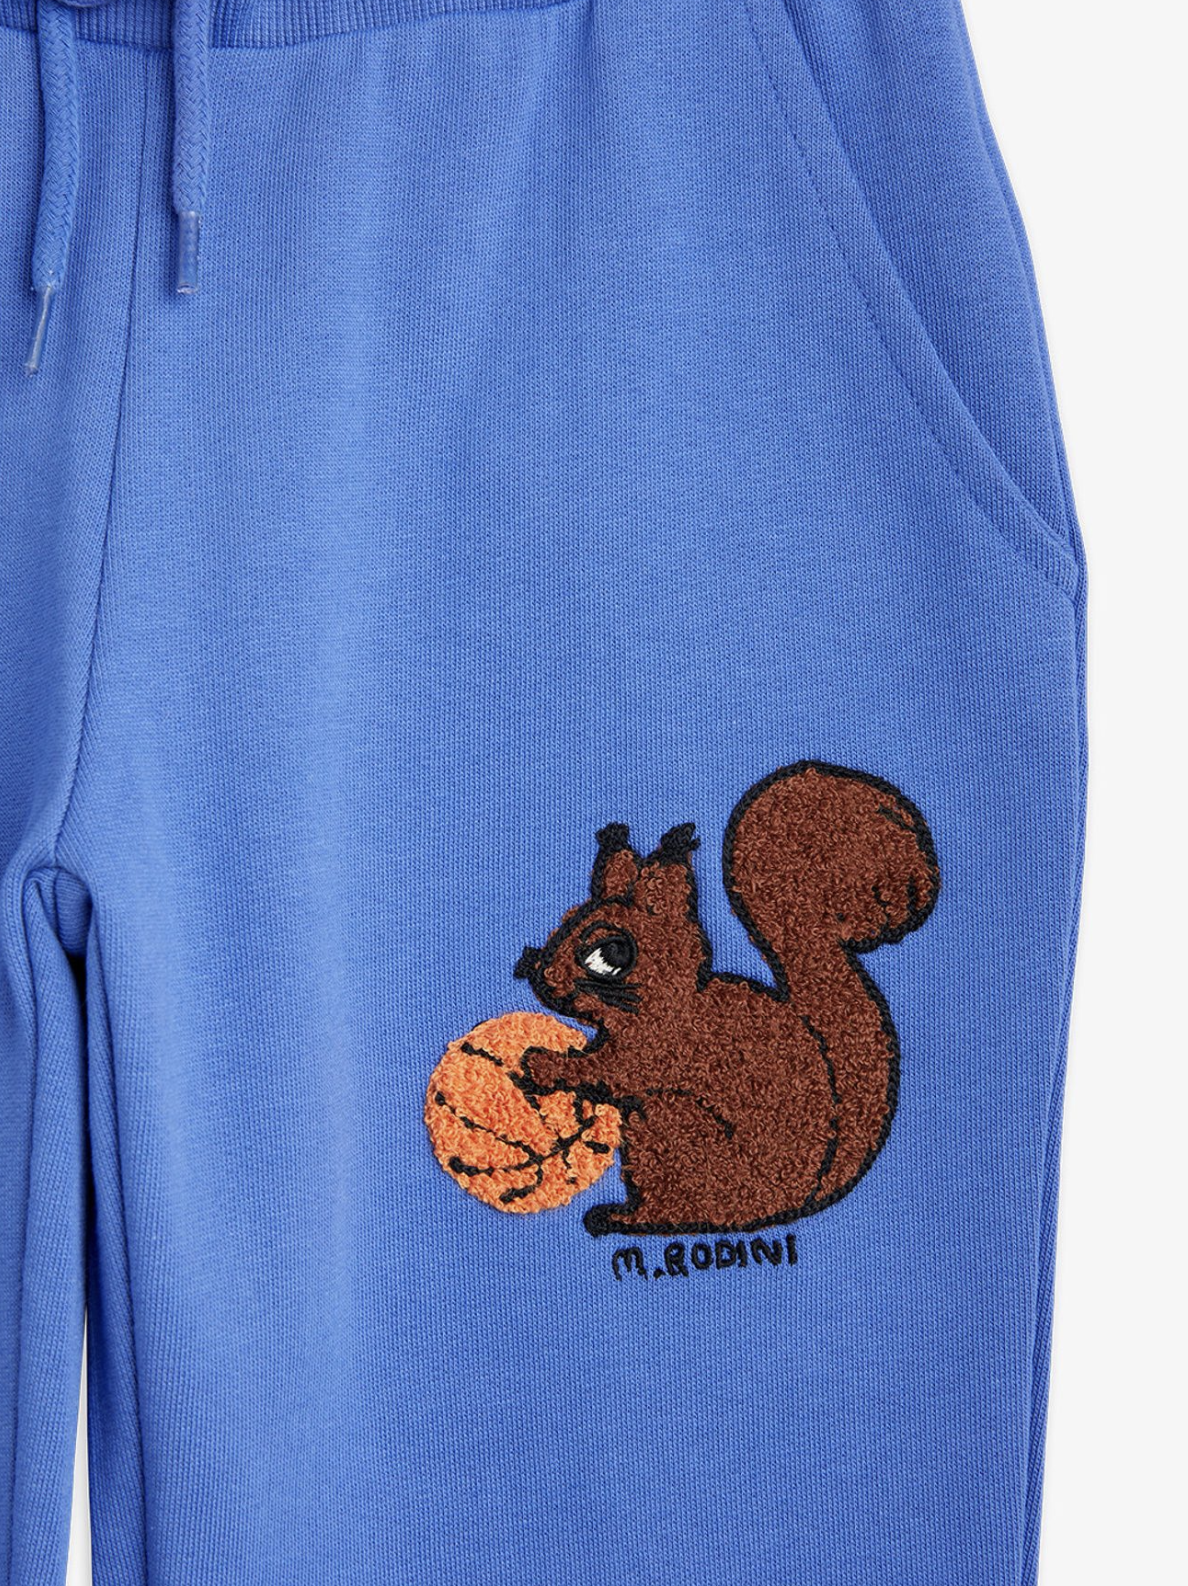 Eichhörnchen-Jogginghose